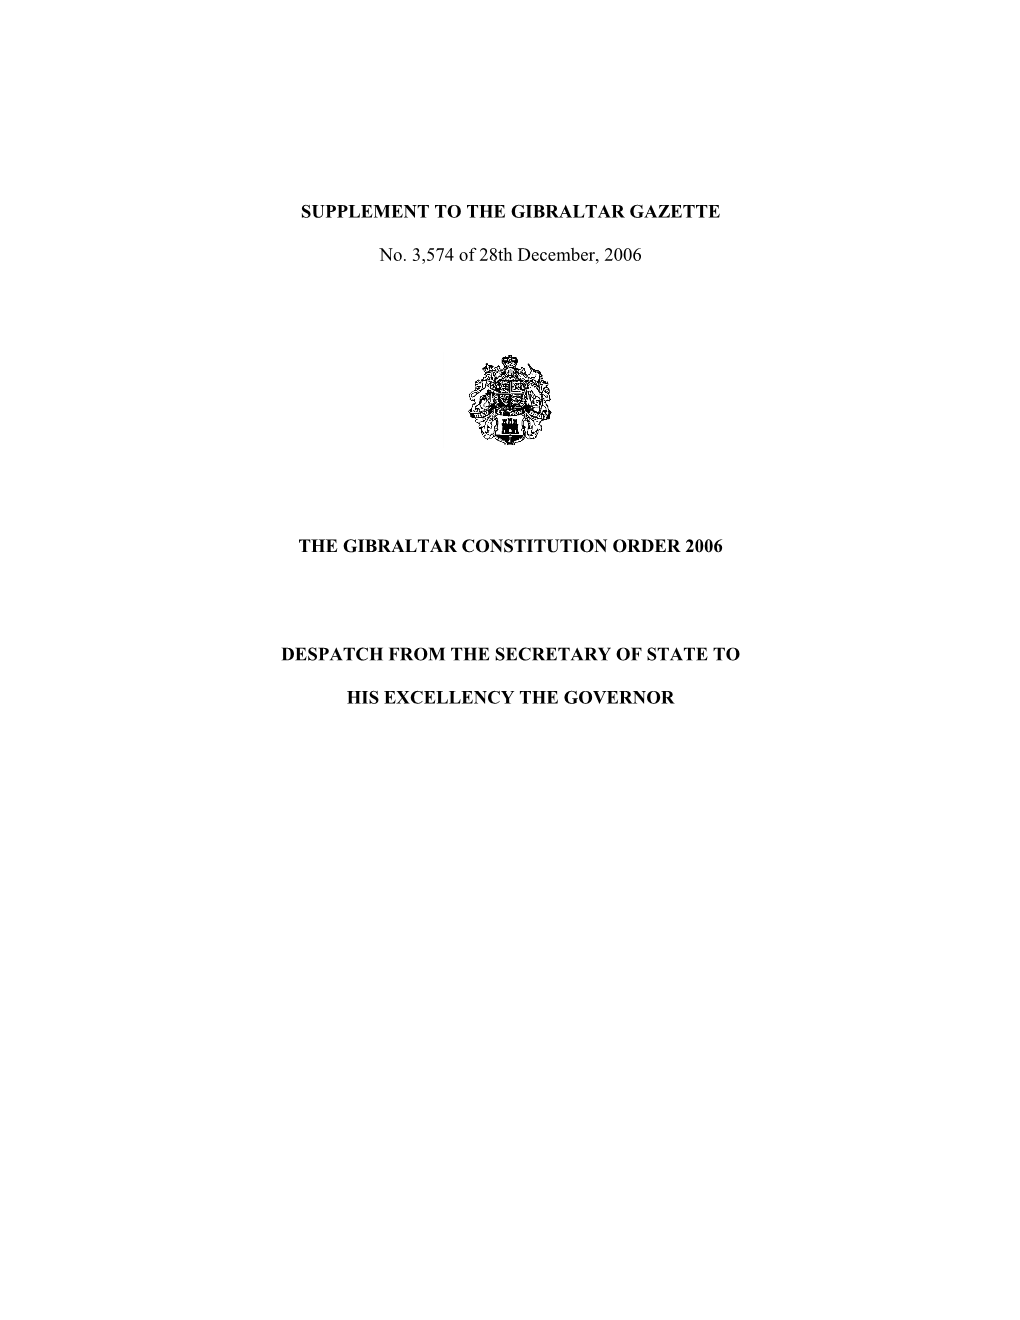 The Gibraltar Constitution Order 2006